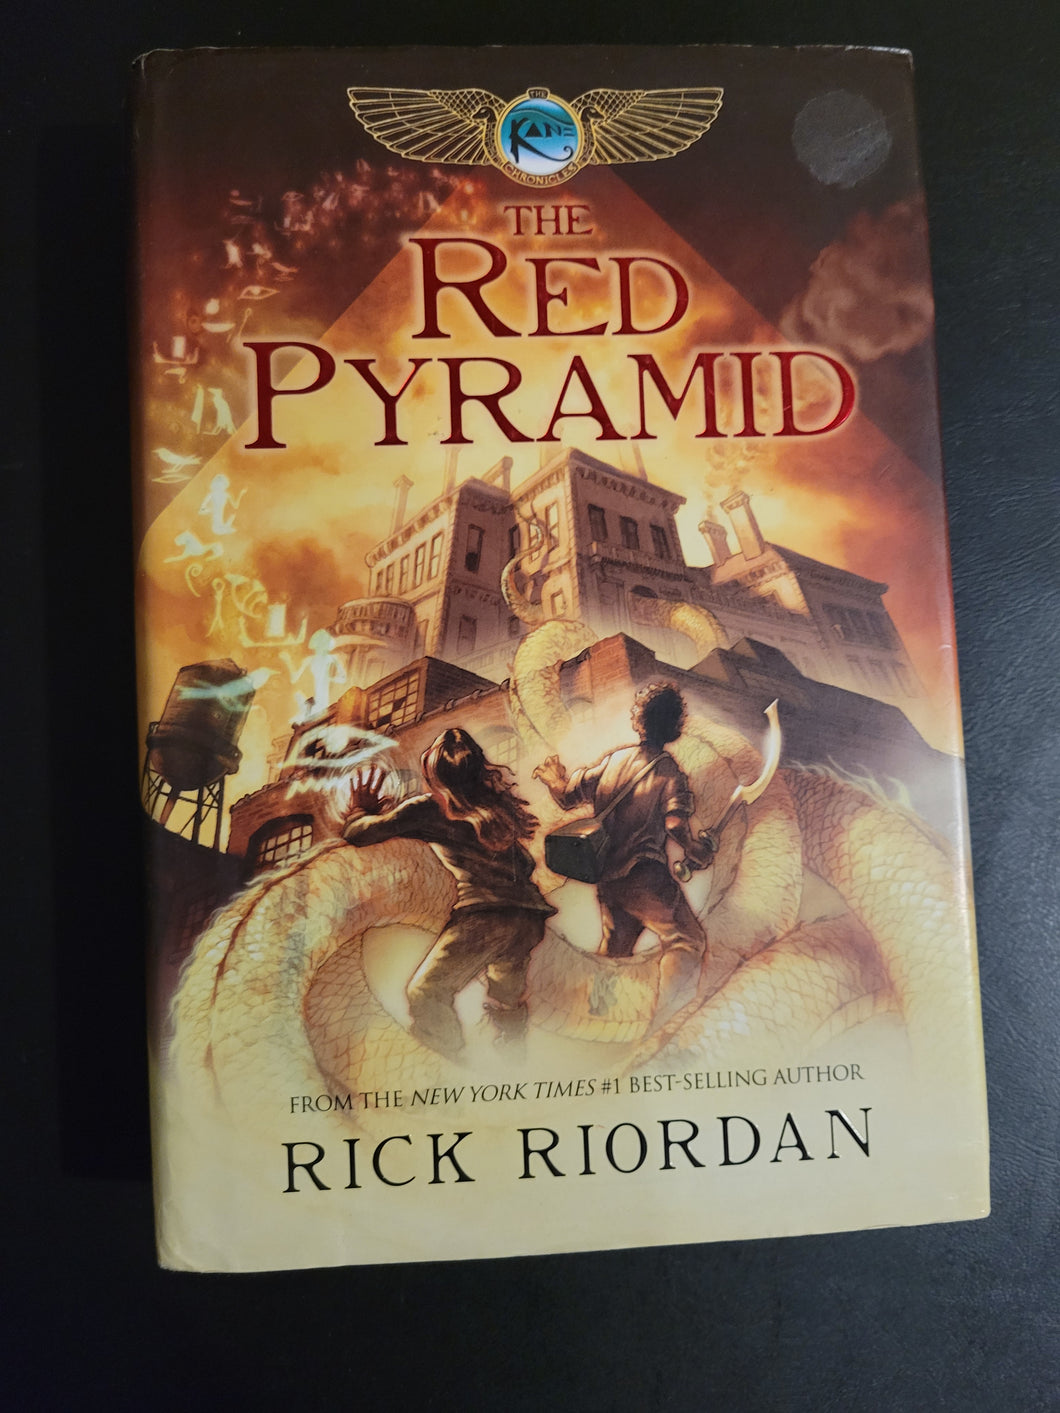 The Red Pyramid by Rick Riordan (Kane Chronicles #1)